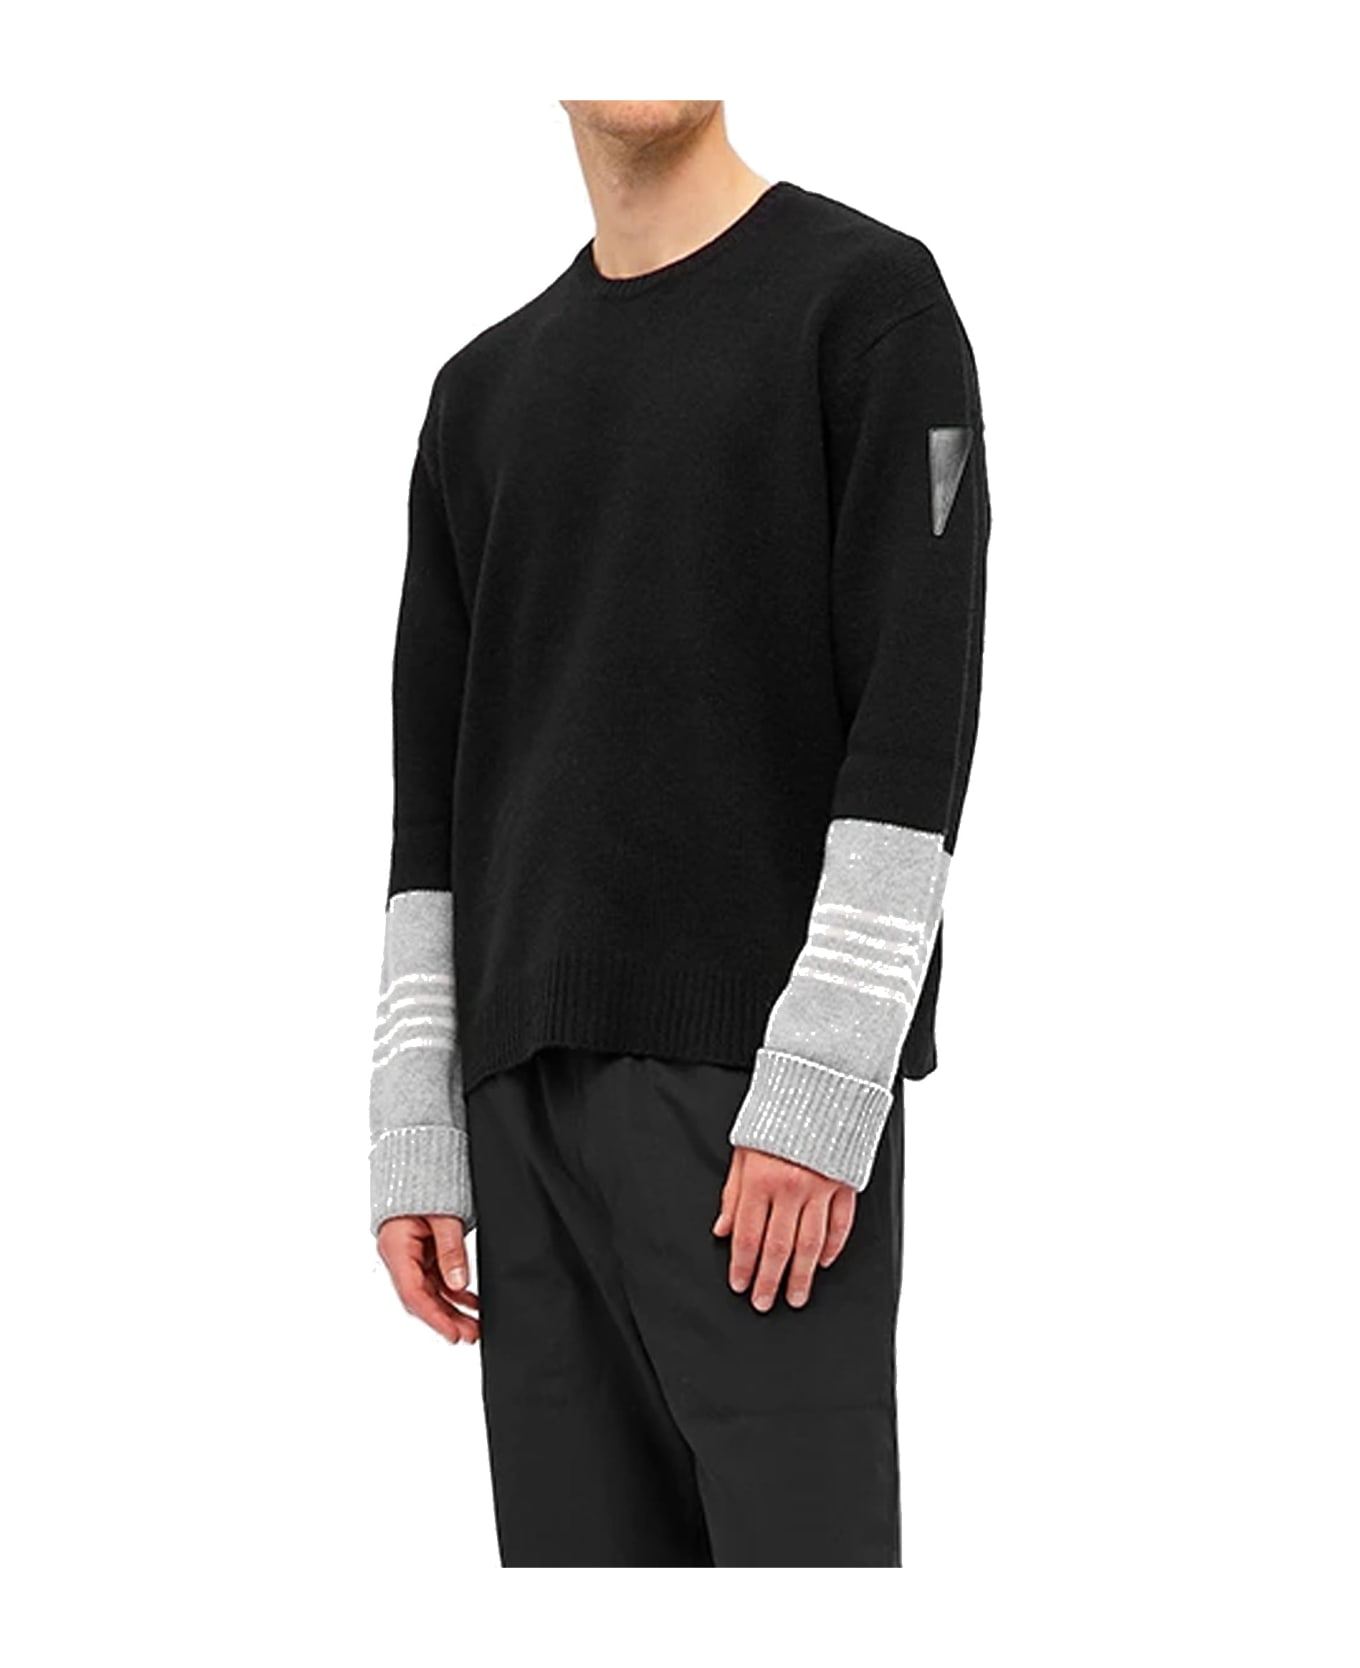 Neil Barrett Wool And Cashmere Sweater - Black